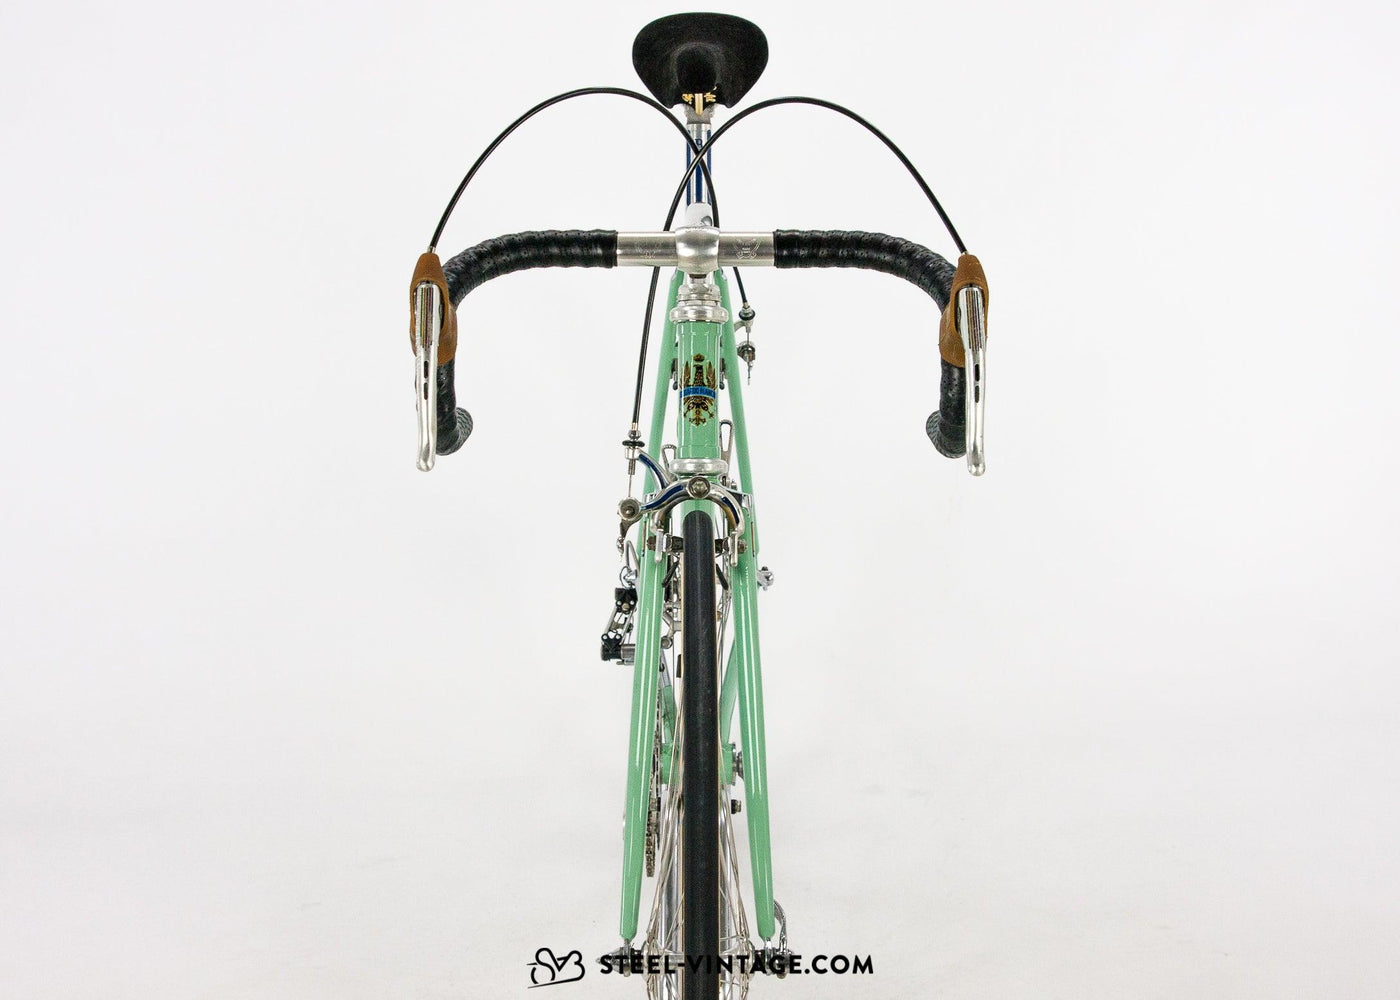 Bianchi Specialissima Celeste Bicycle 1979 - Steel Vintage Bikes